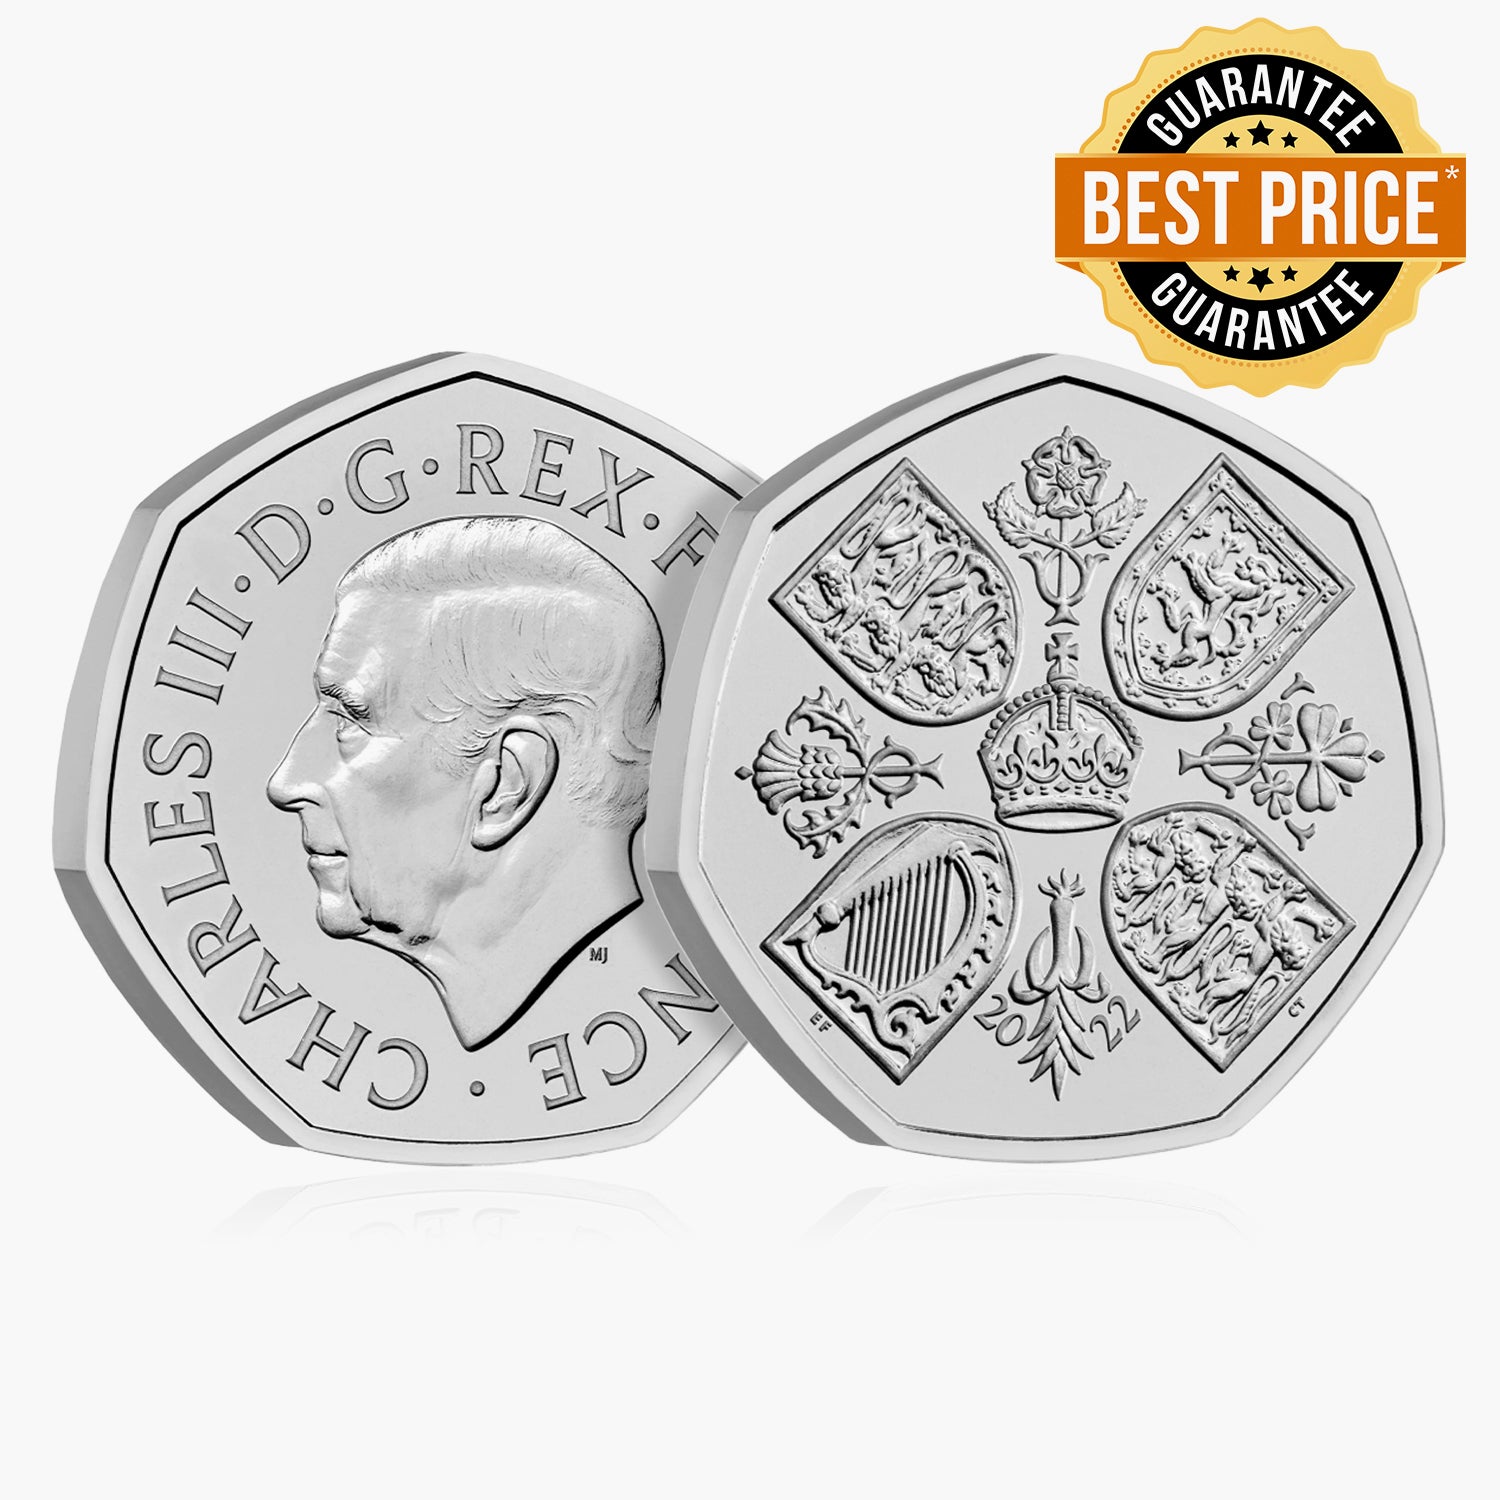 Her Majesty Queen Elizabeth II 2022 50p Coin - King Charles III first portrait